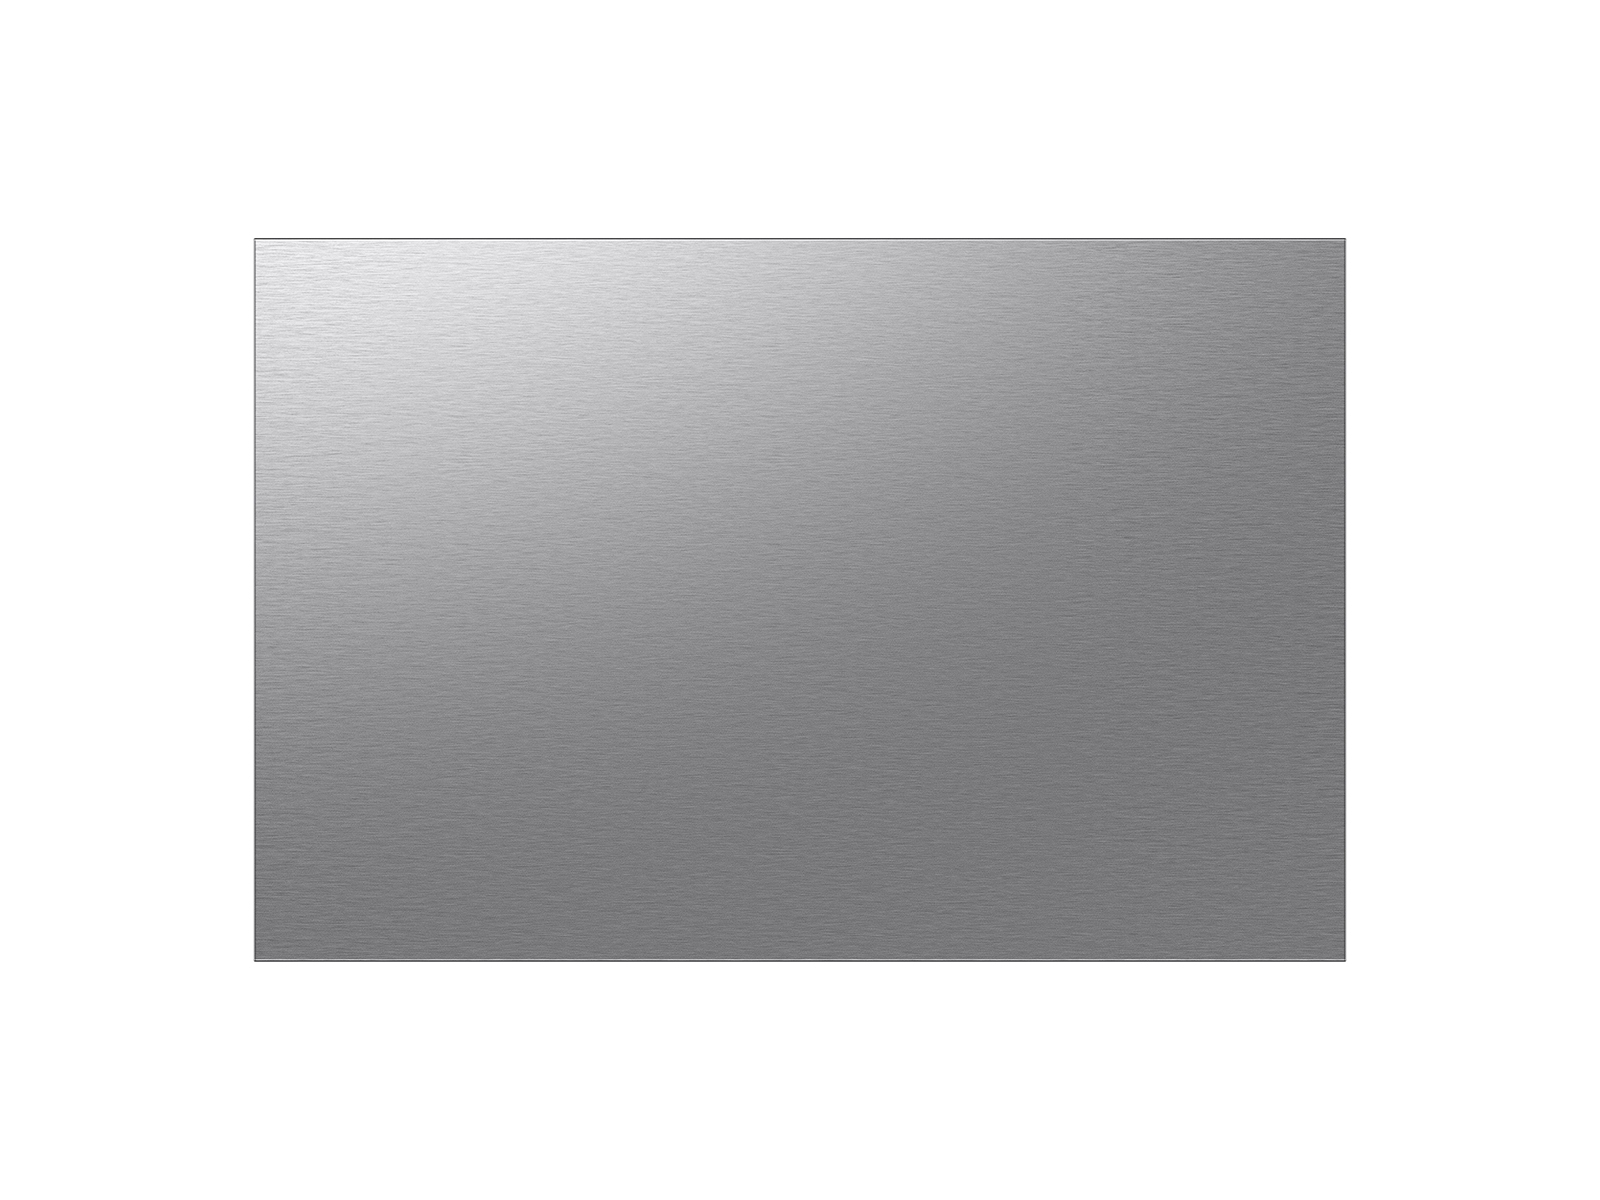 Thumbnail image of Bespoke 3-Door French Door Refrigerator Panel in Stainless Steel - Bottom Panel